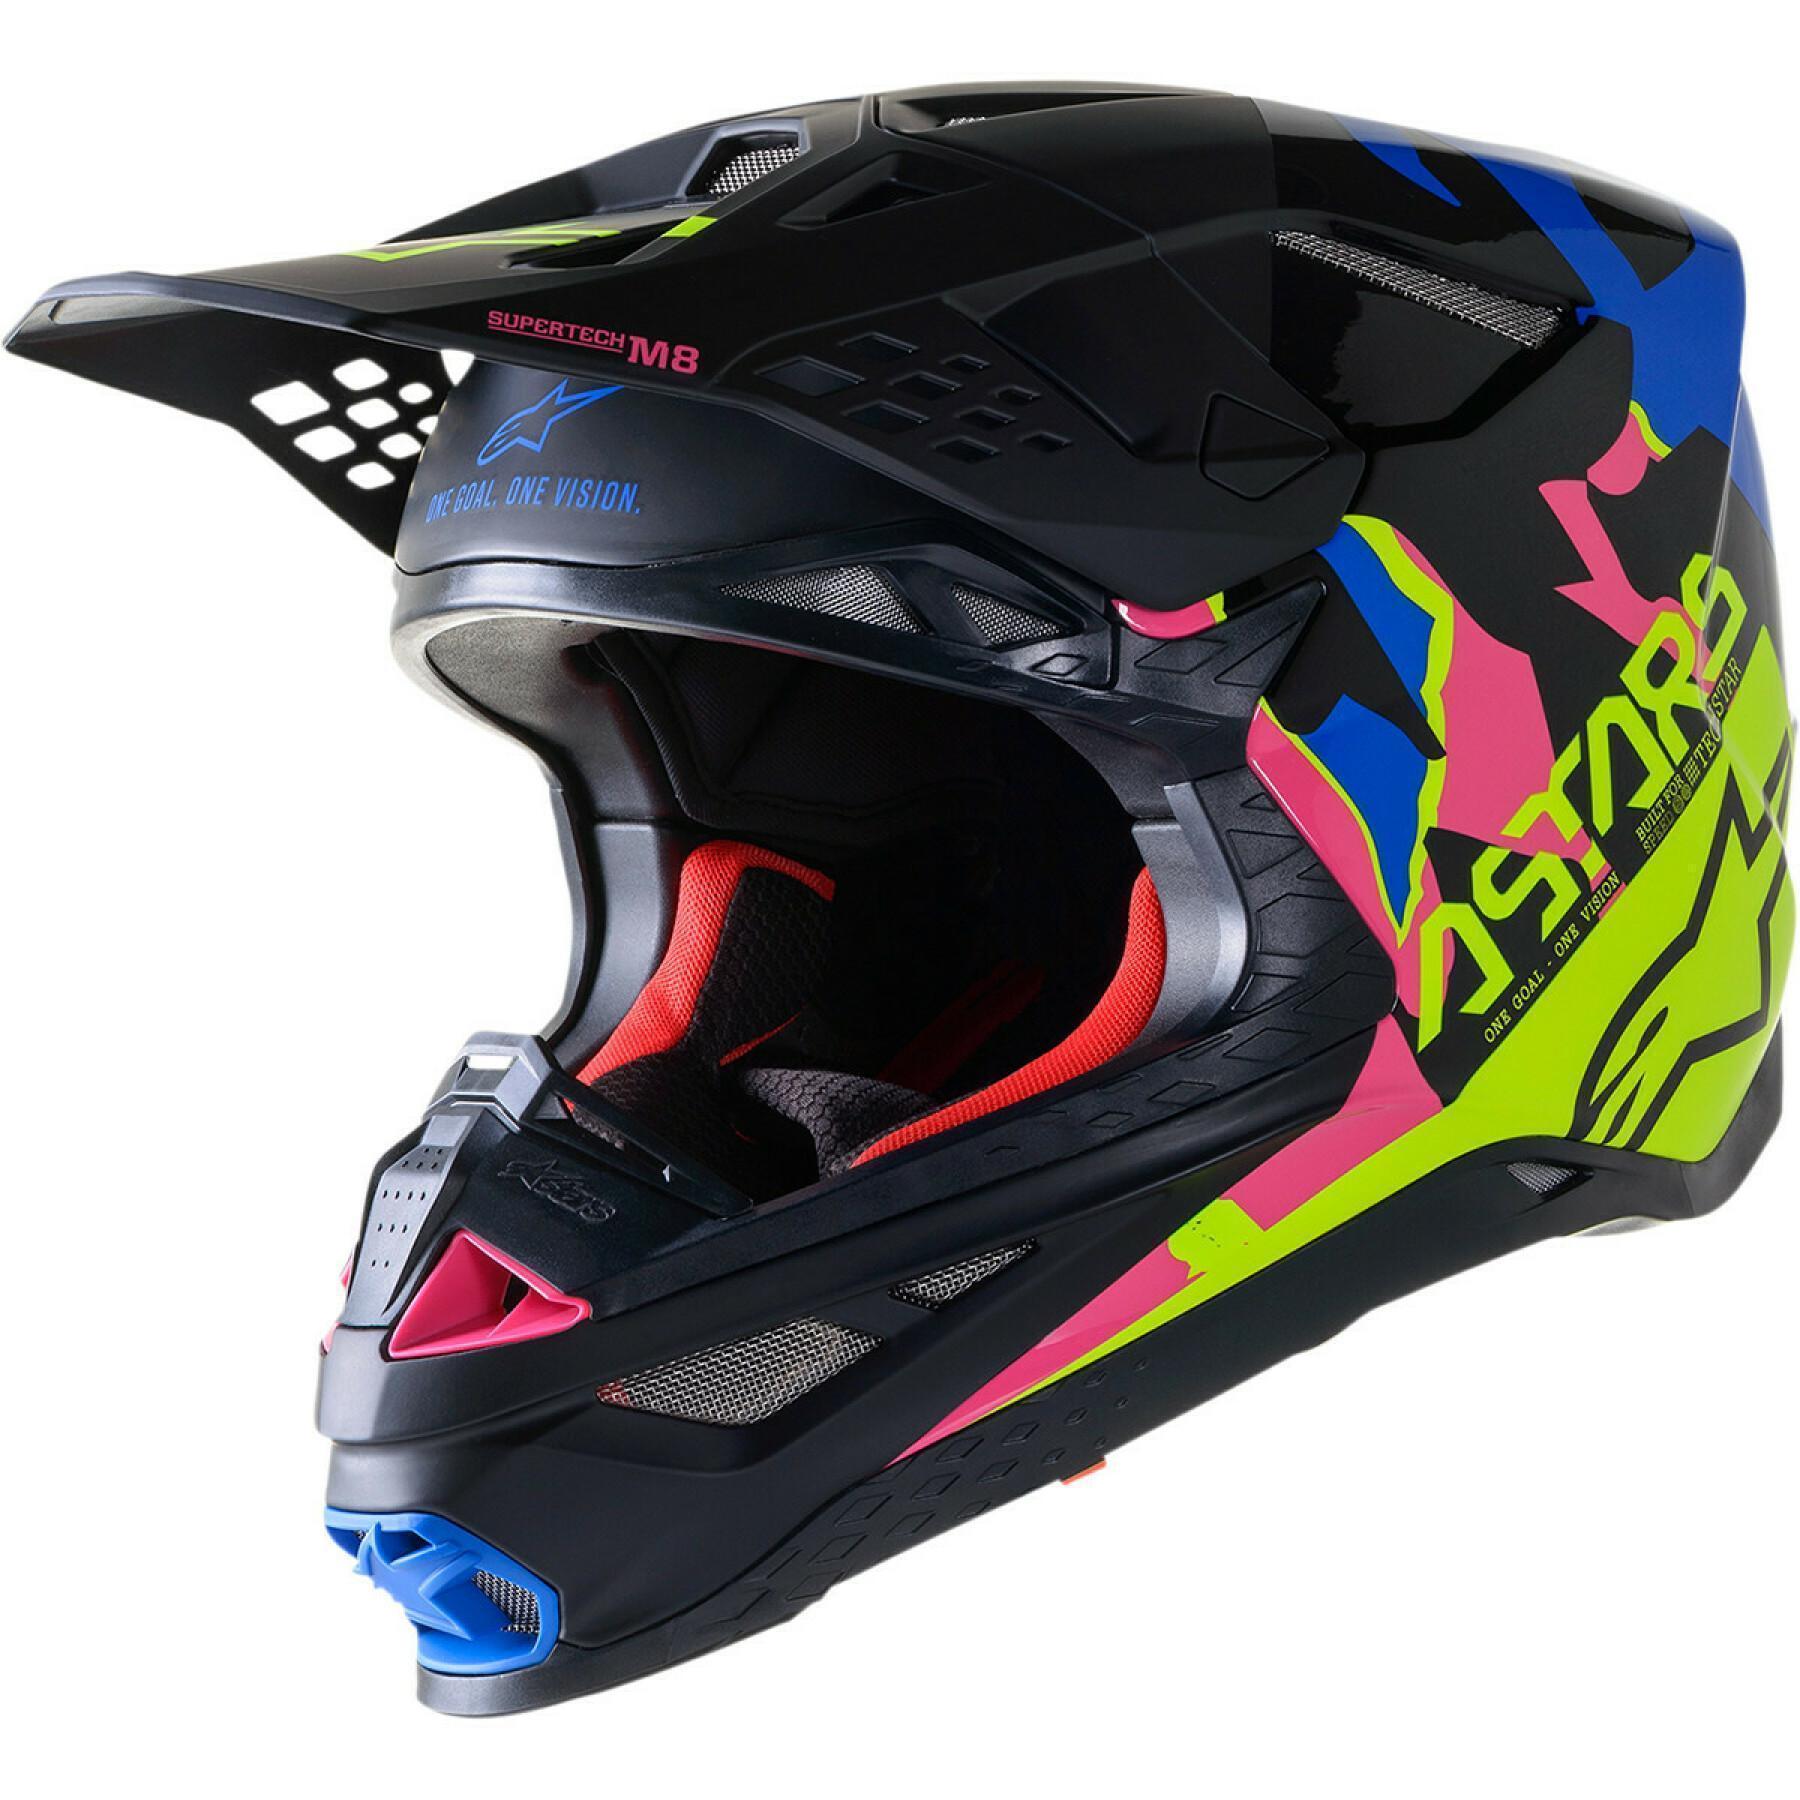 Motorcycle helmet Alpinestars SM8 echo